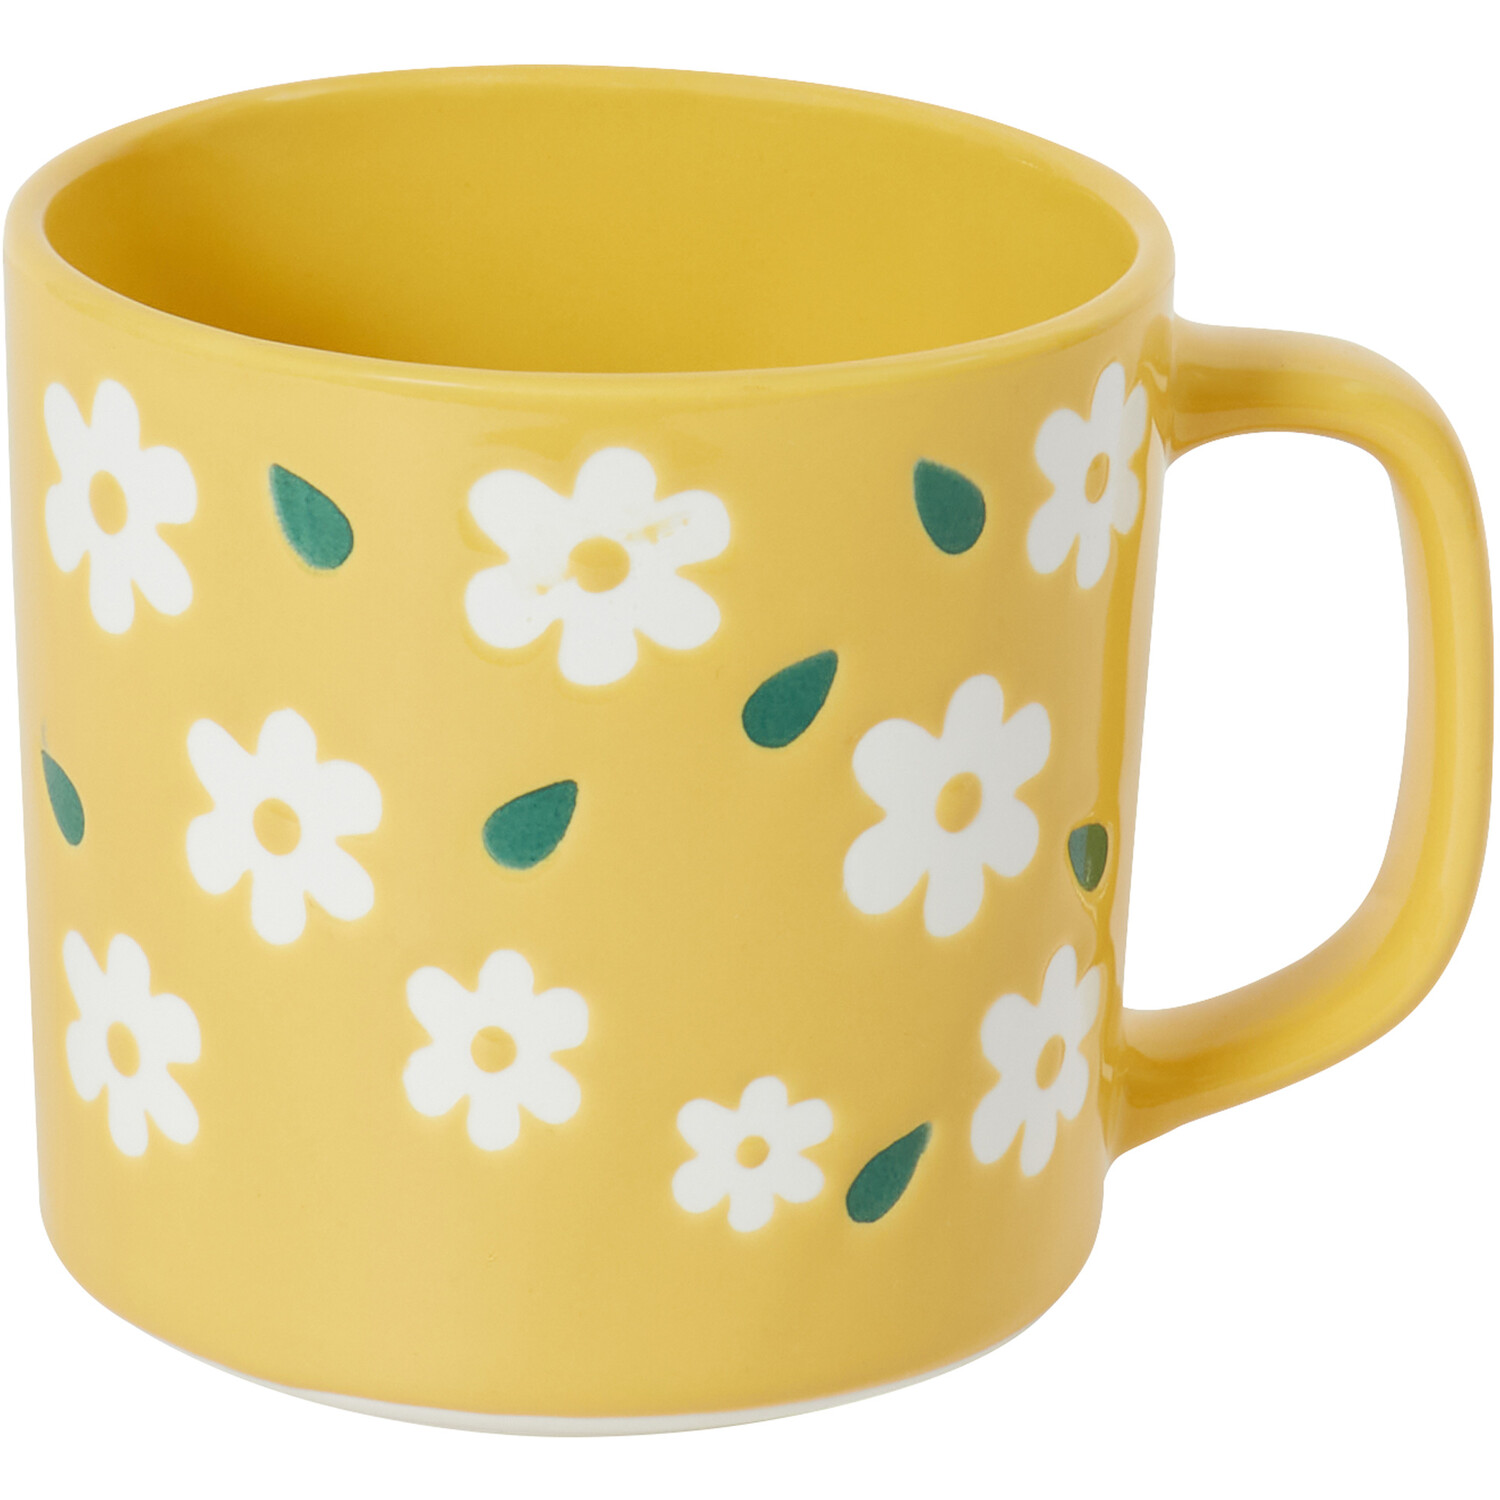 Flower Mug - Yellow Image 1